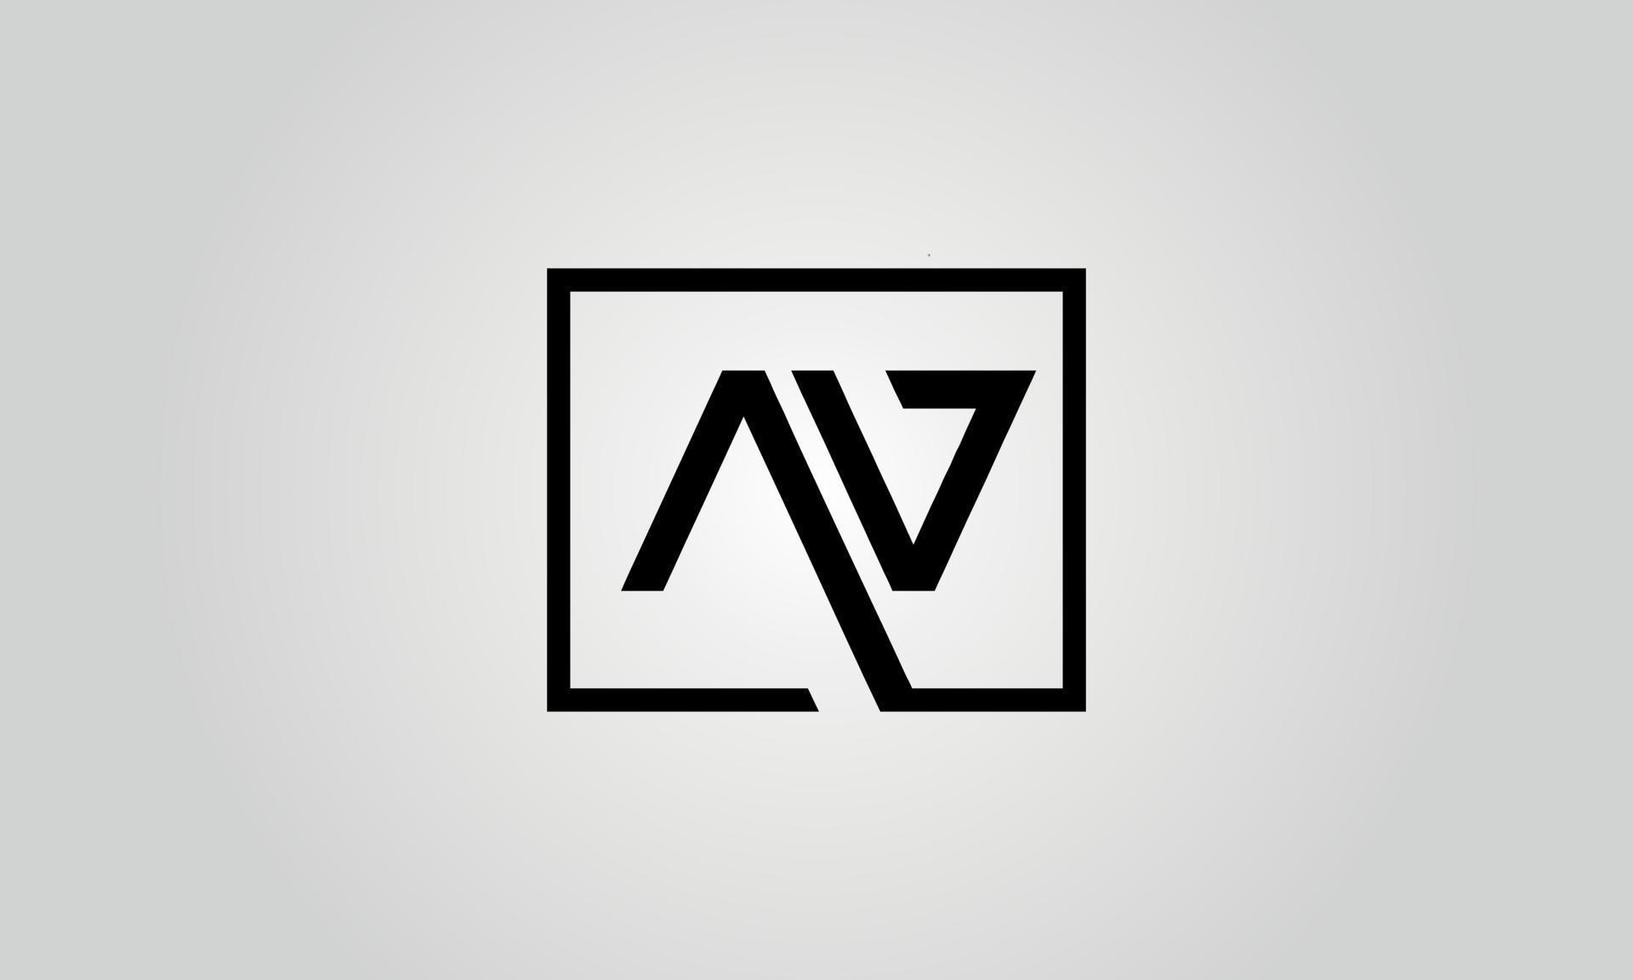 design de logotipo av. modelo de vetor livre de design de ícone de logotipo de letra av inicial.